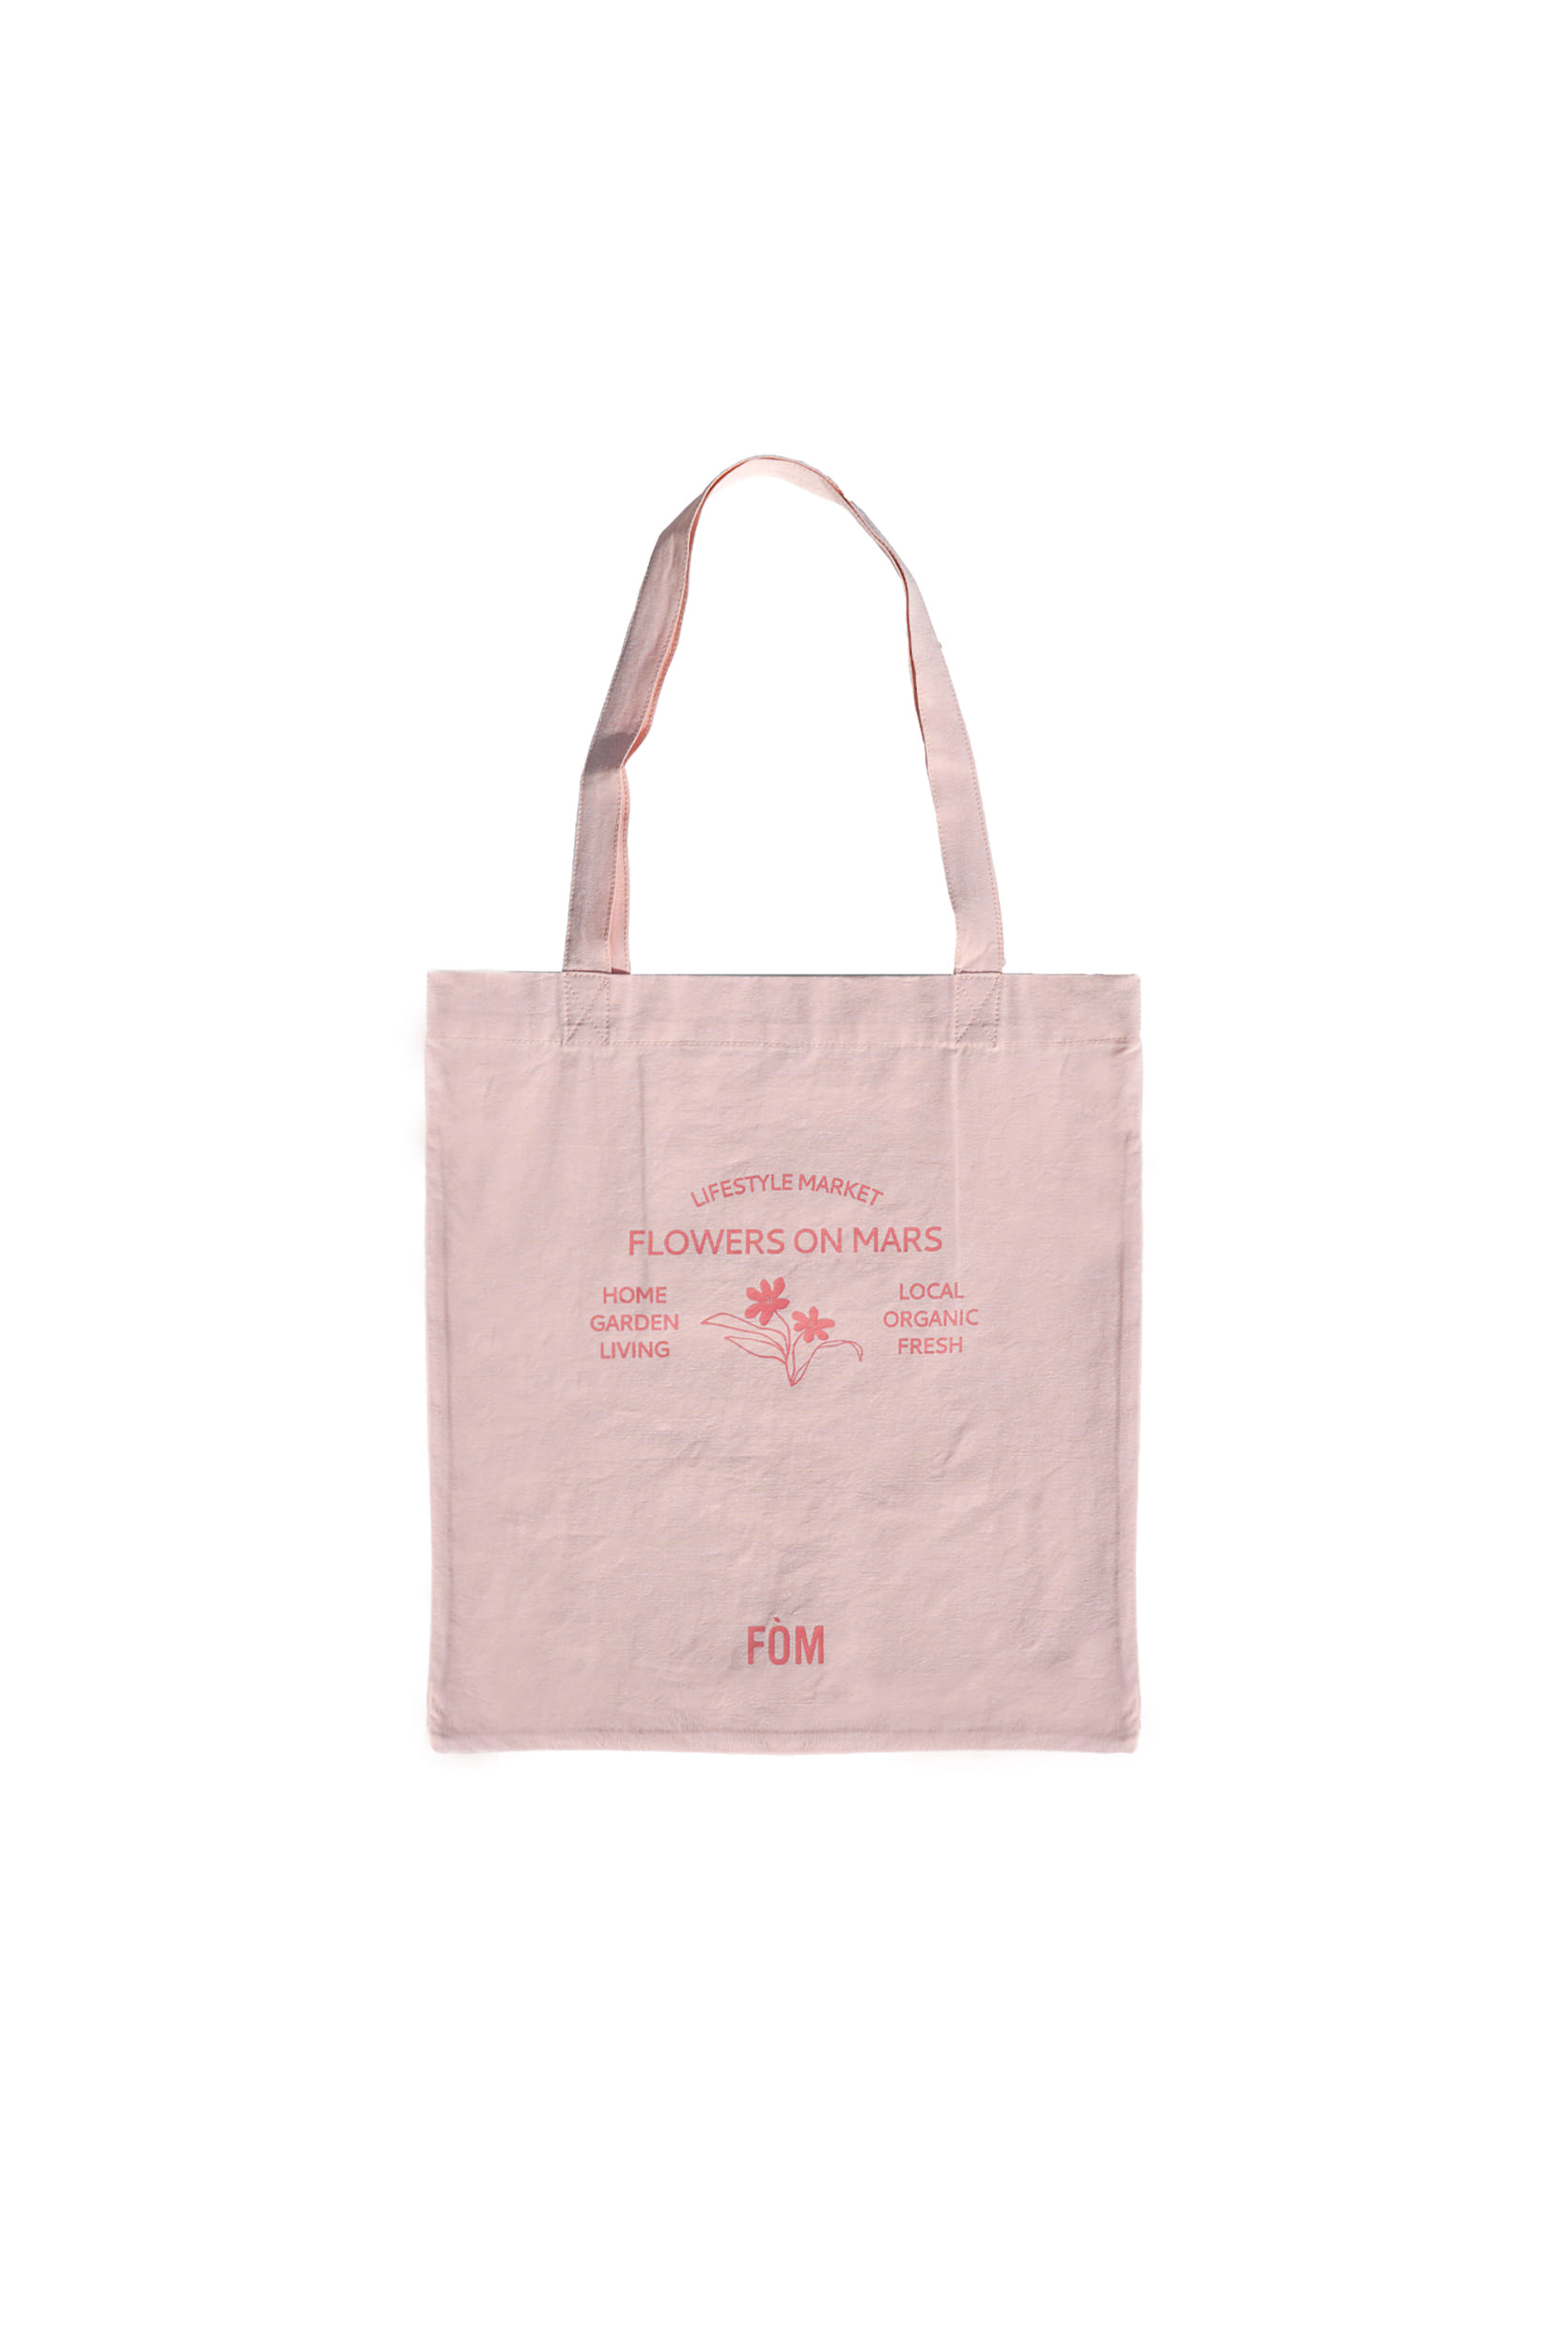 FÒM eco bag  [light pink]